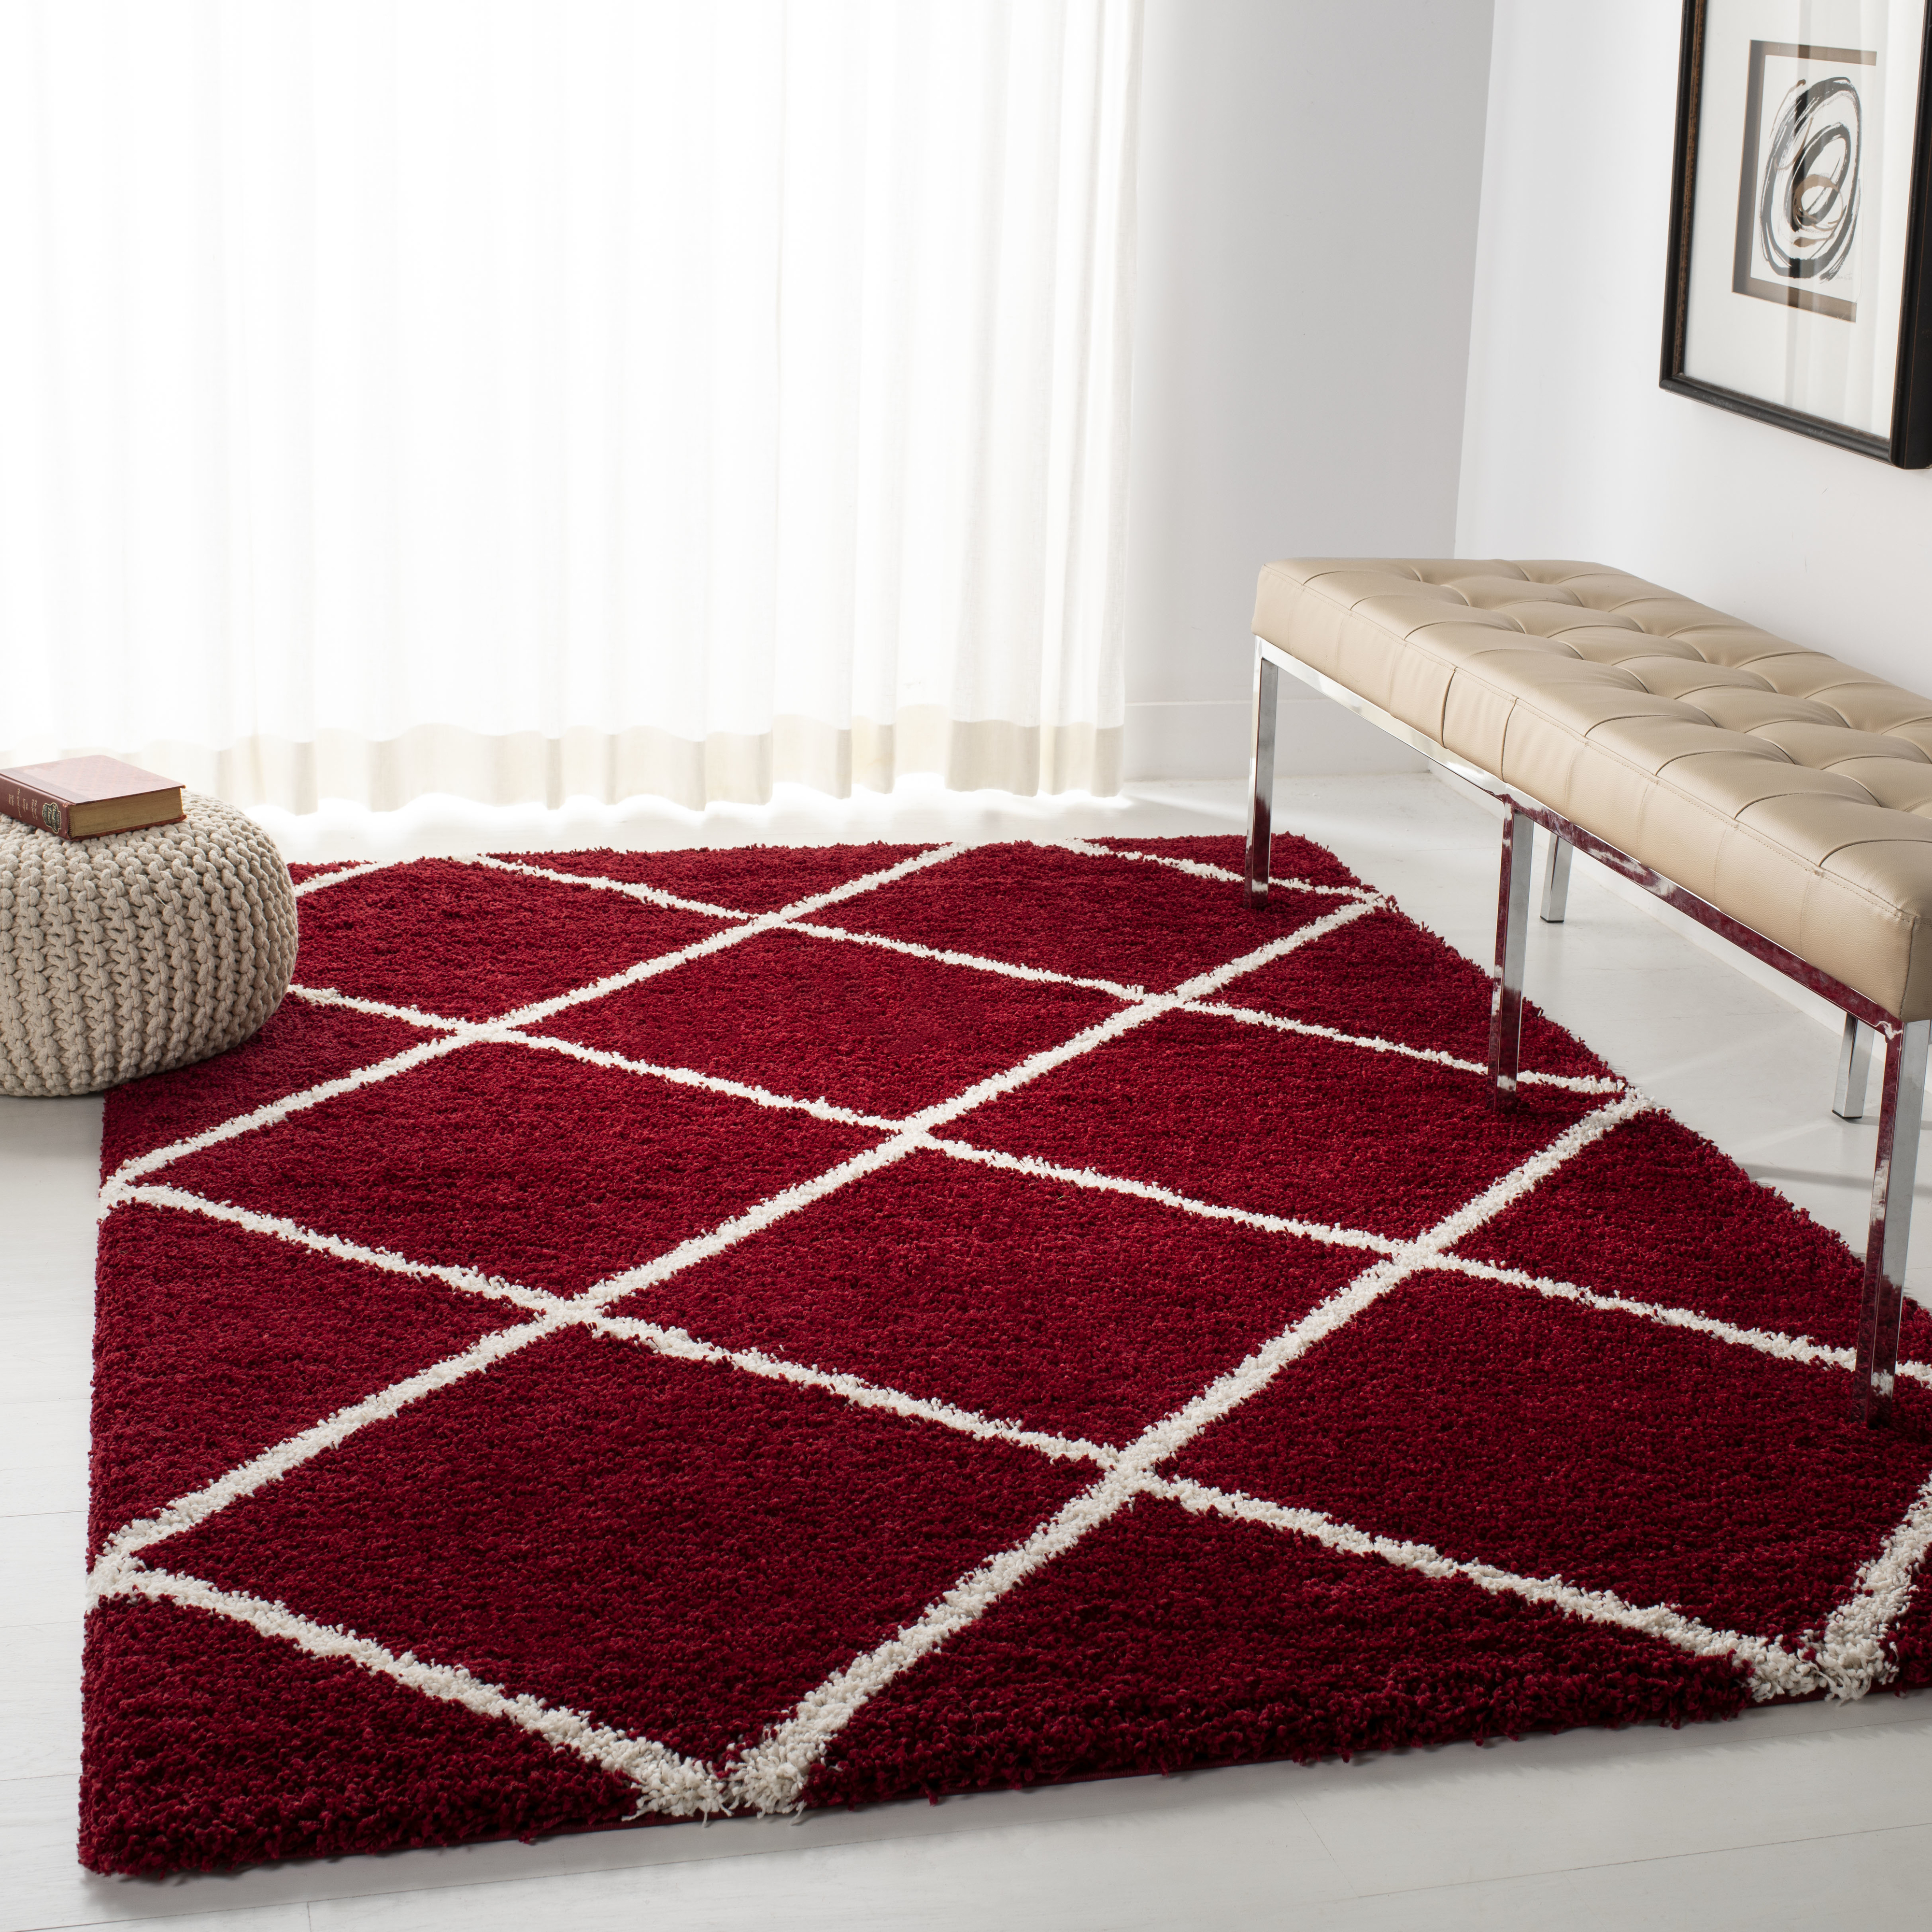 A geometric shag rug